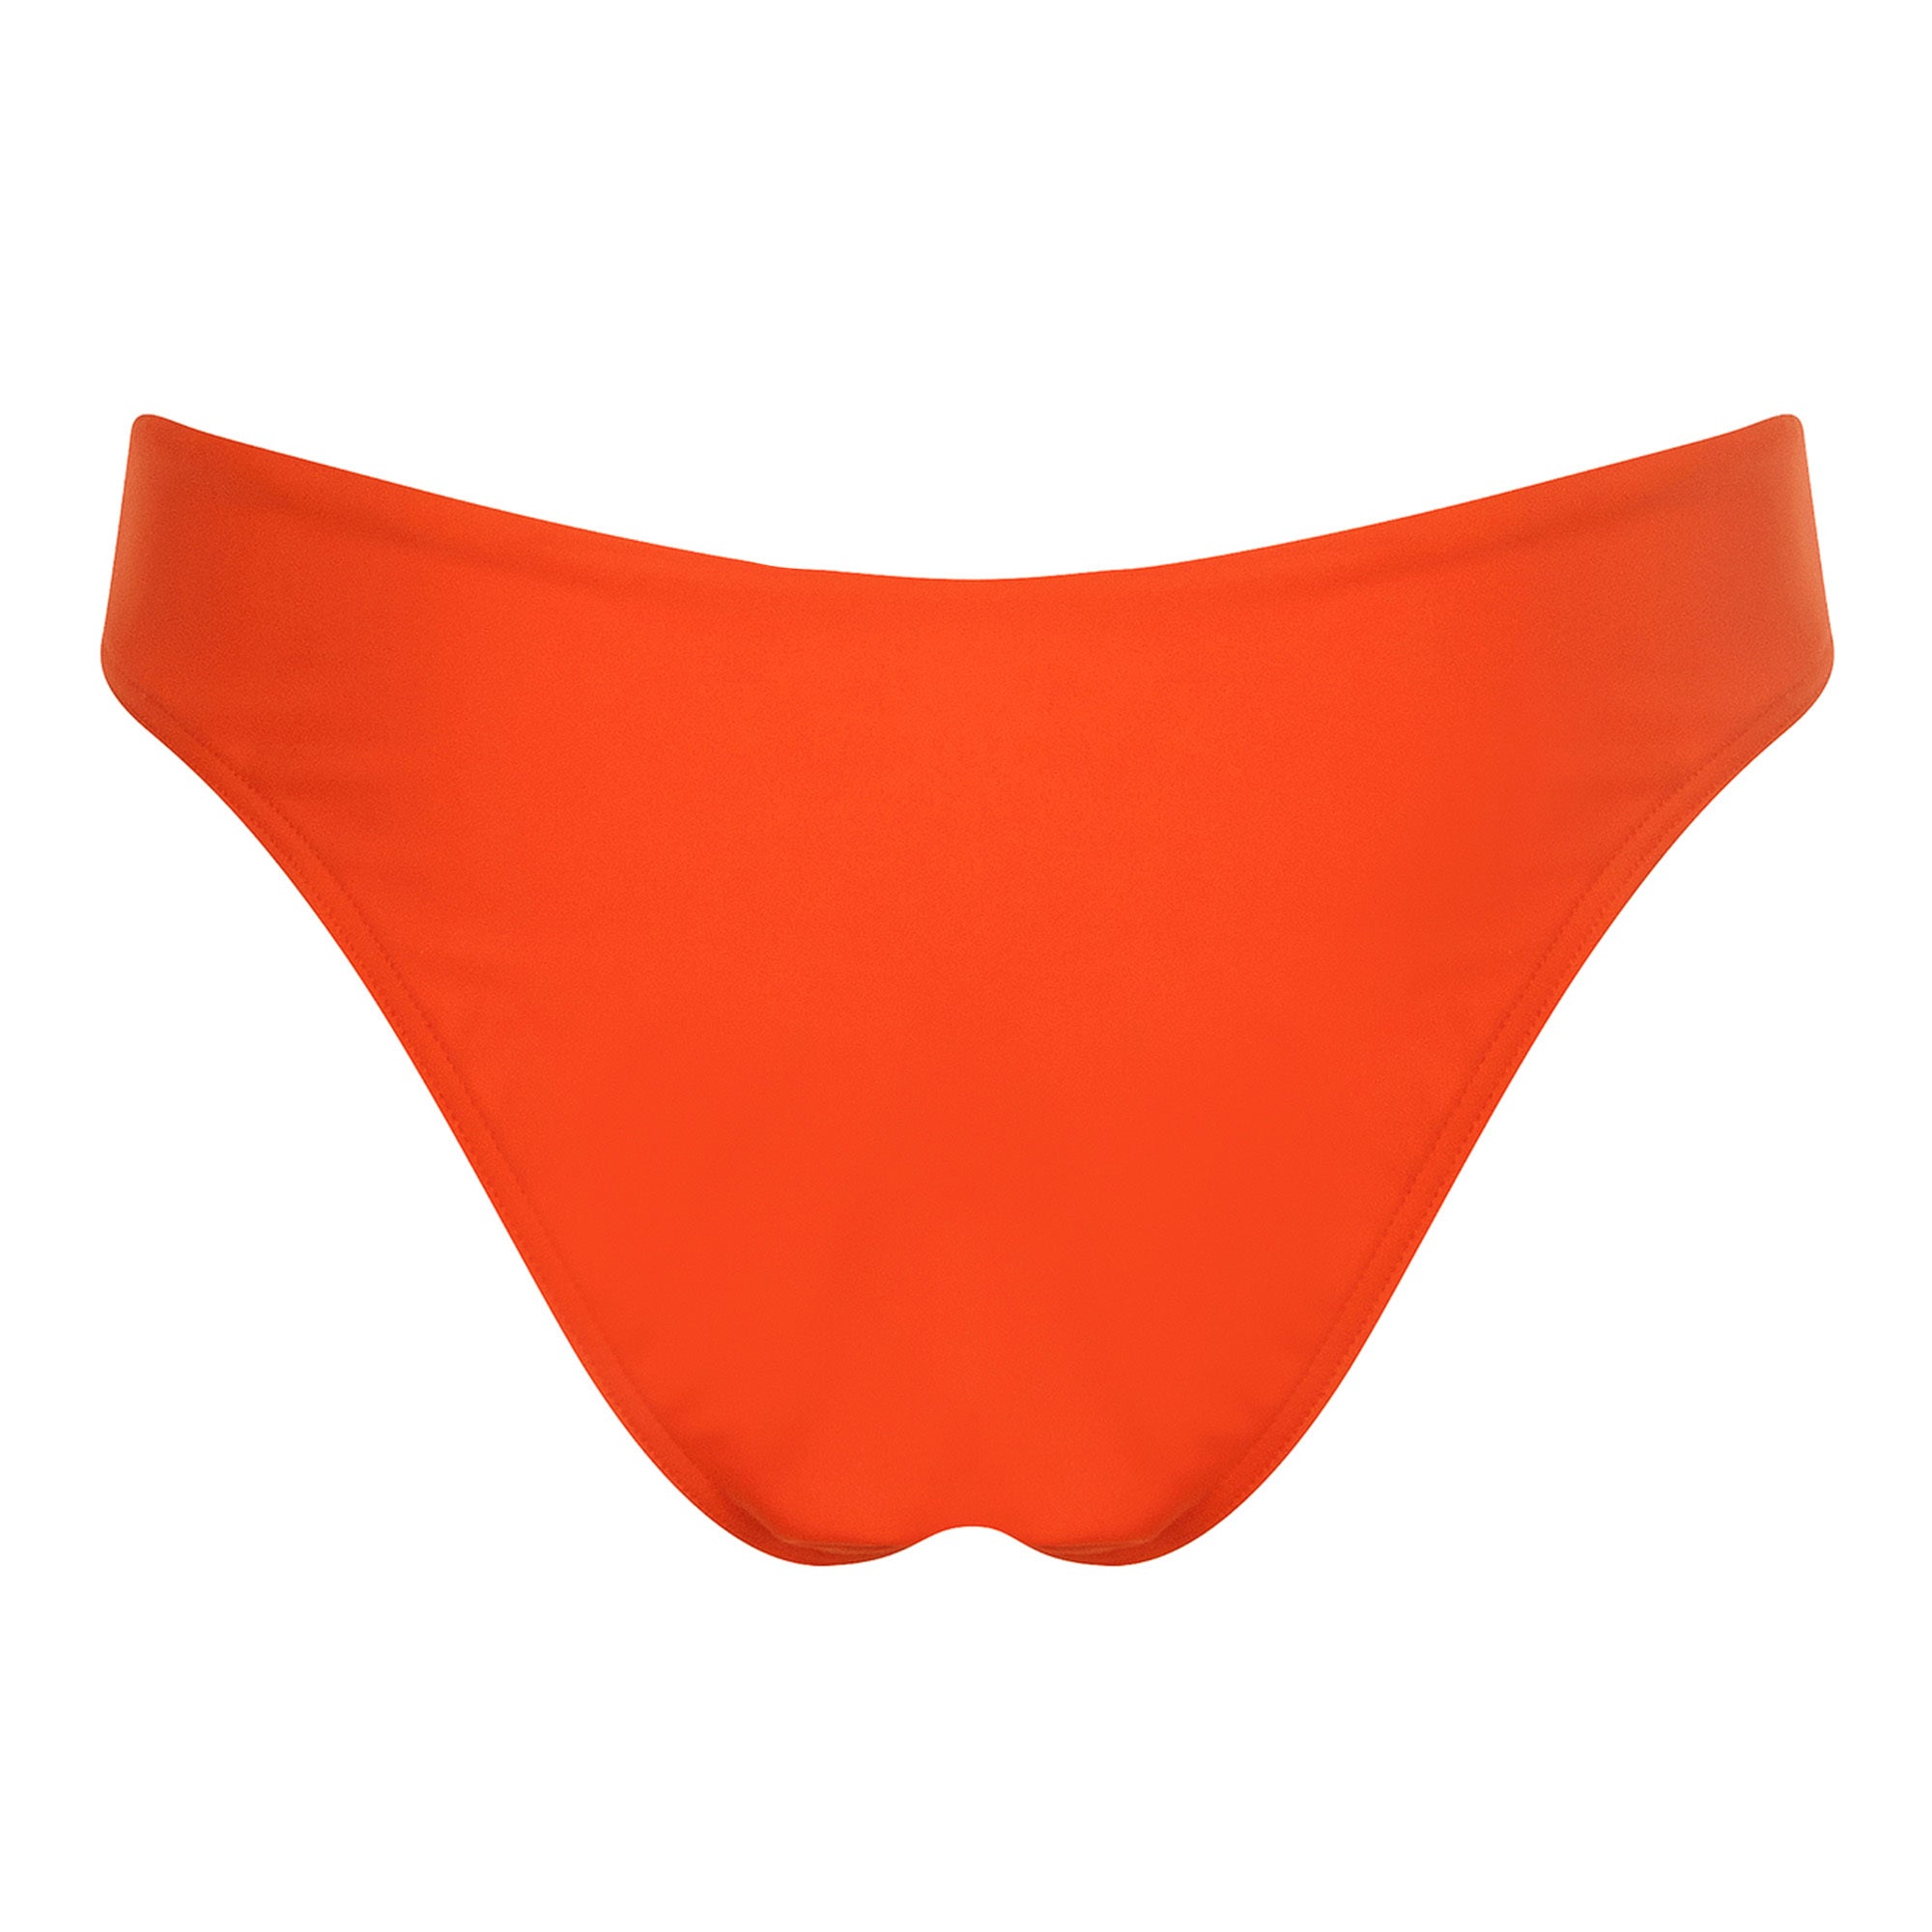 Granadilla Swim Cheeky Bikini Bottoms | Sunset Red